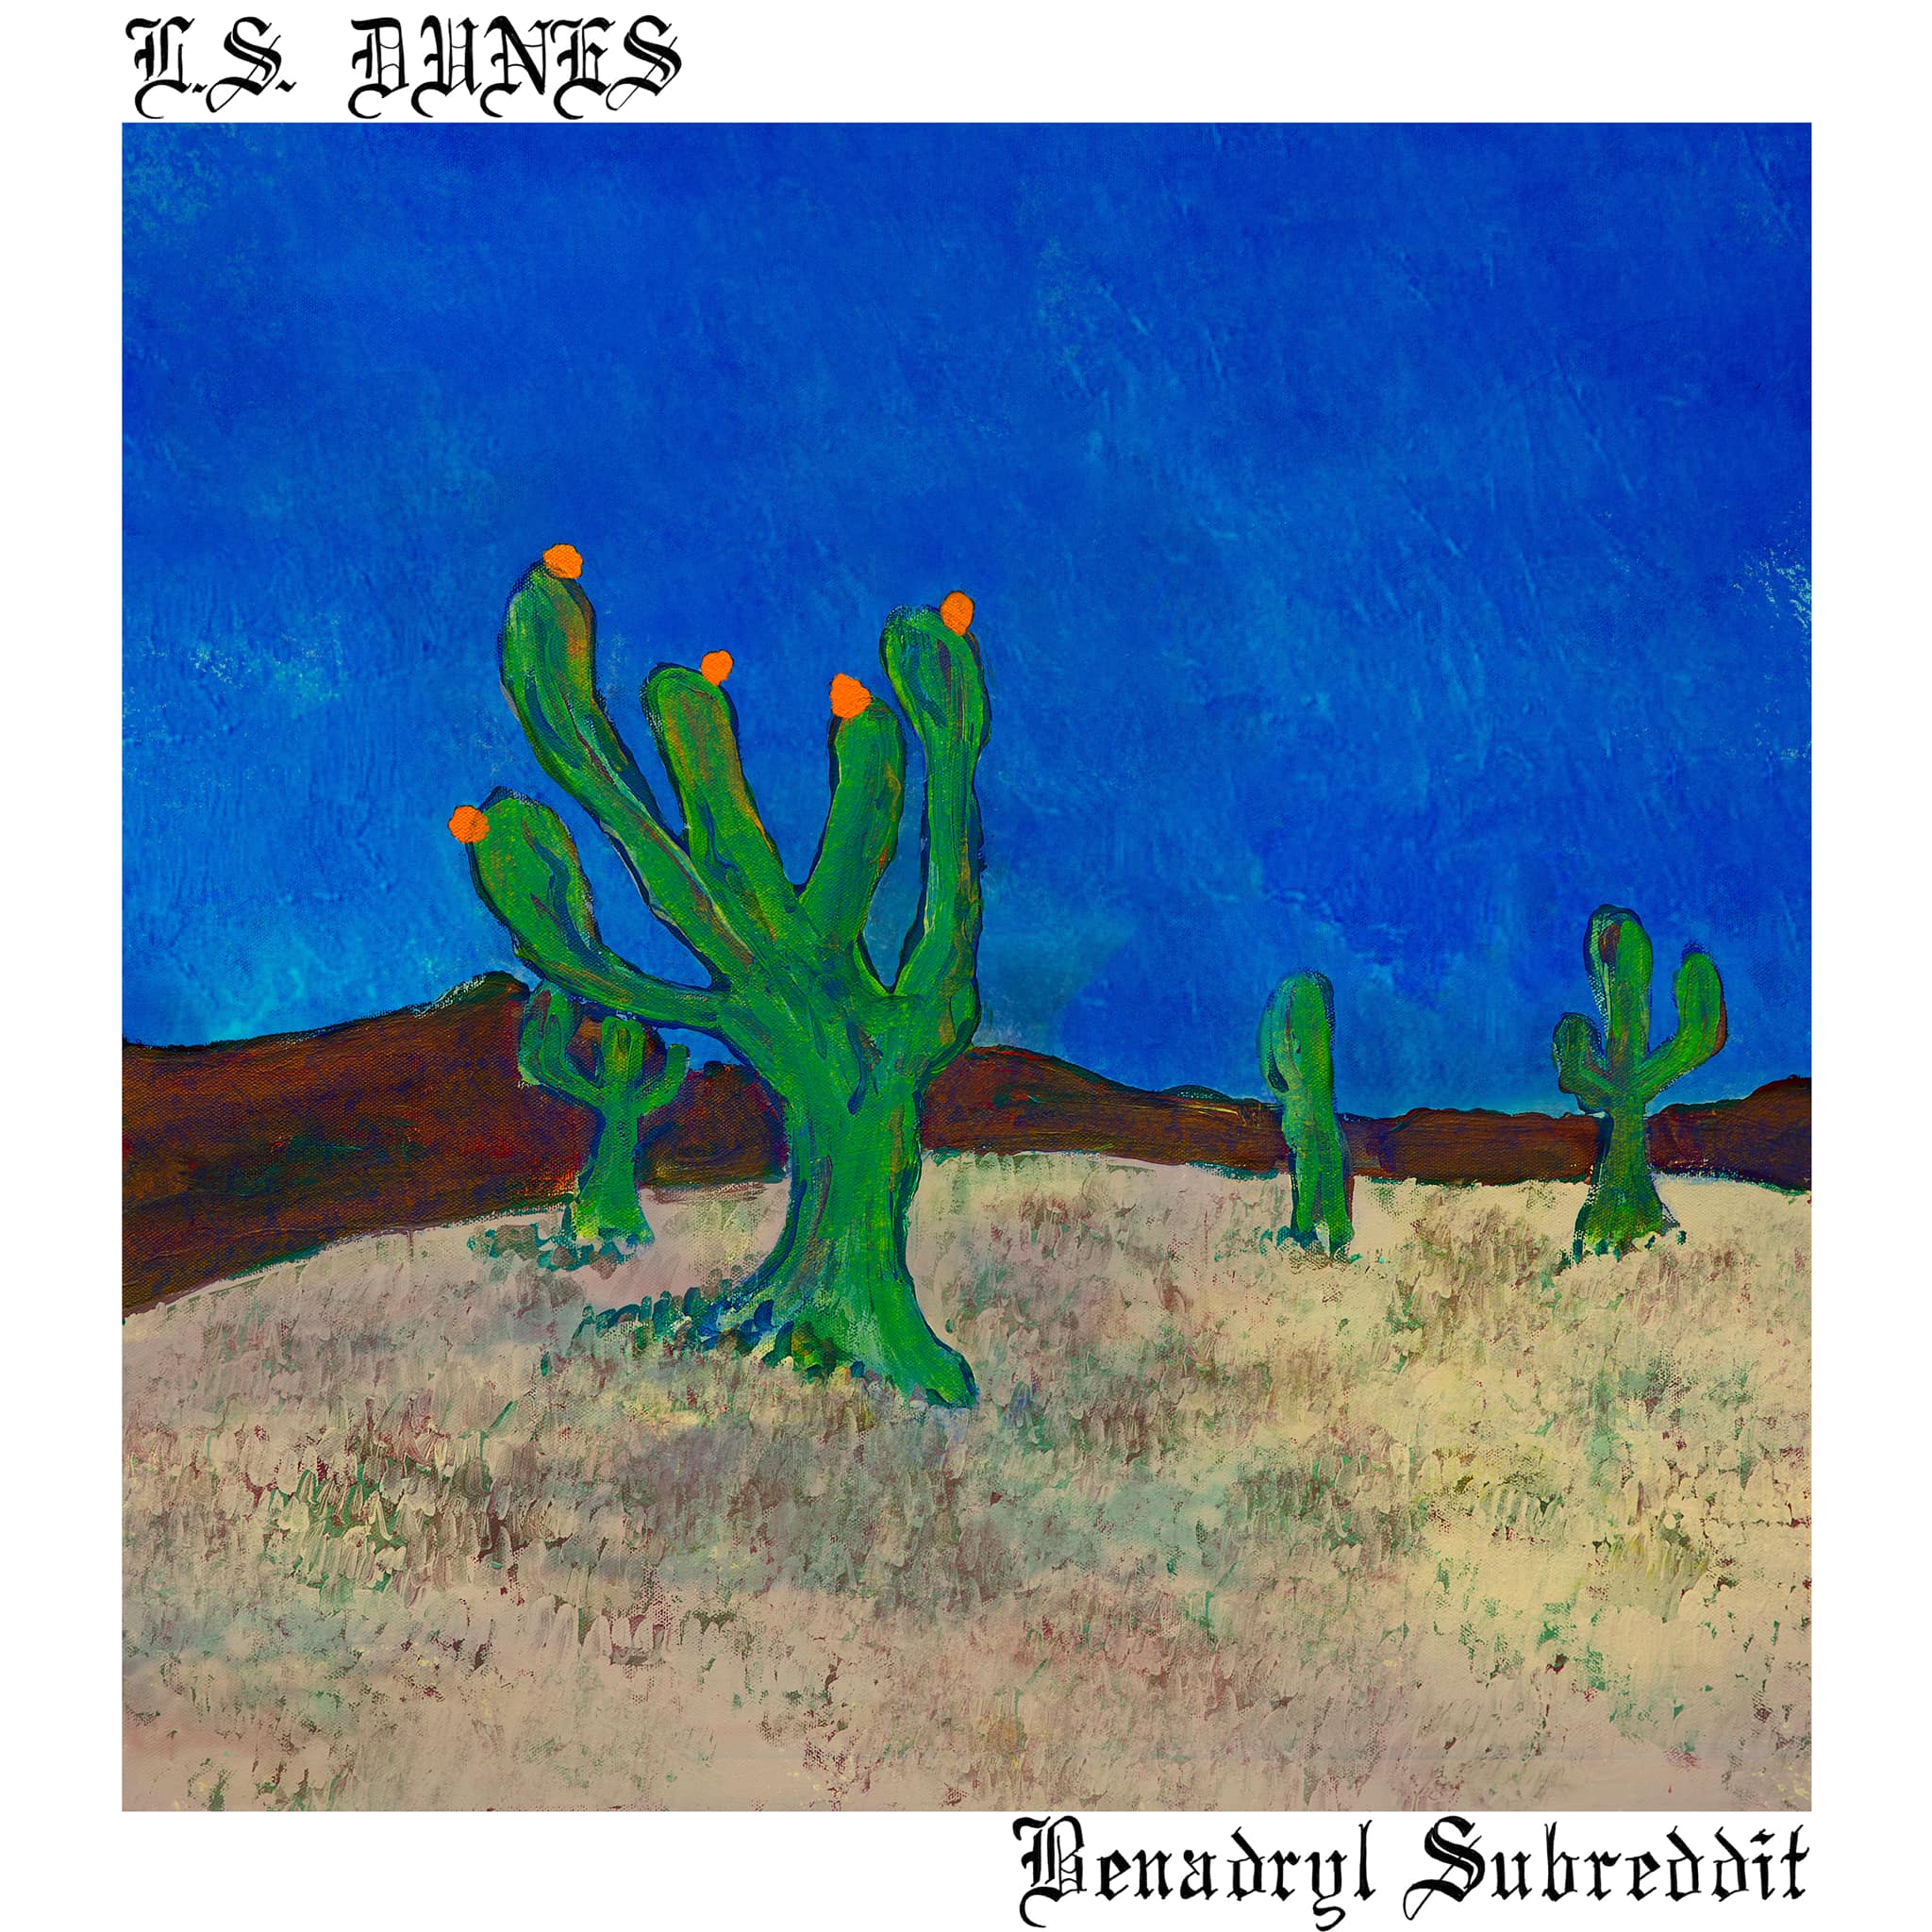 L. S. Dunes “Benadryl Subreddit” single artwork